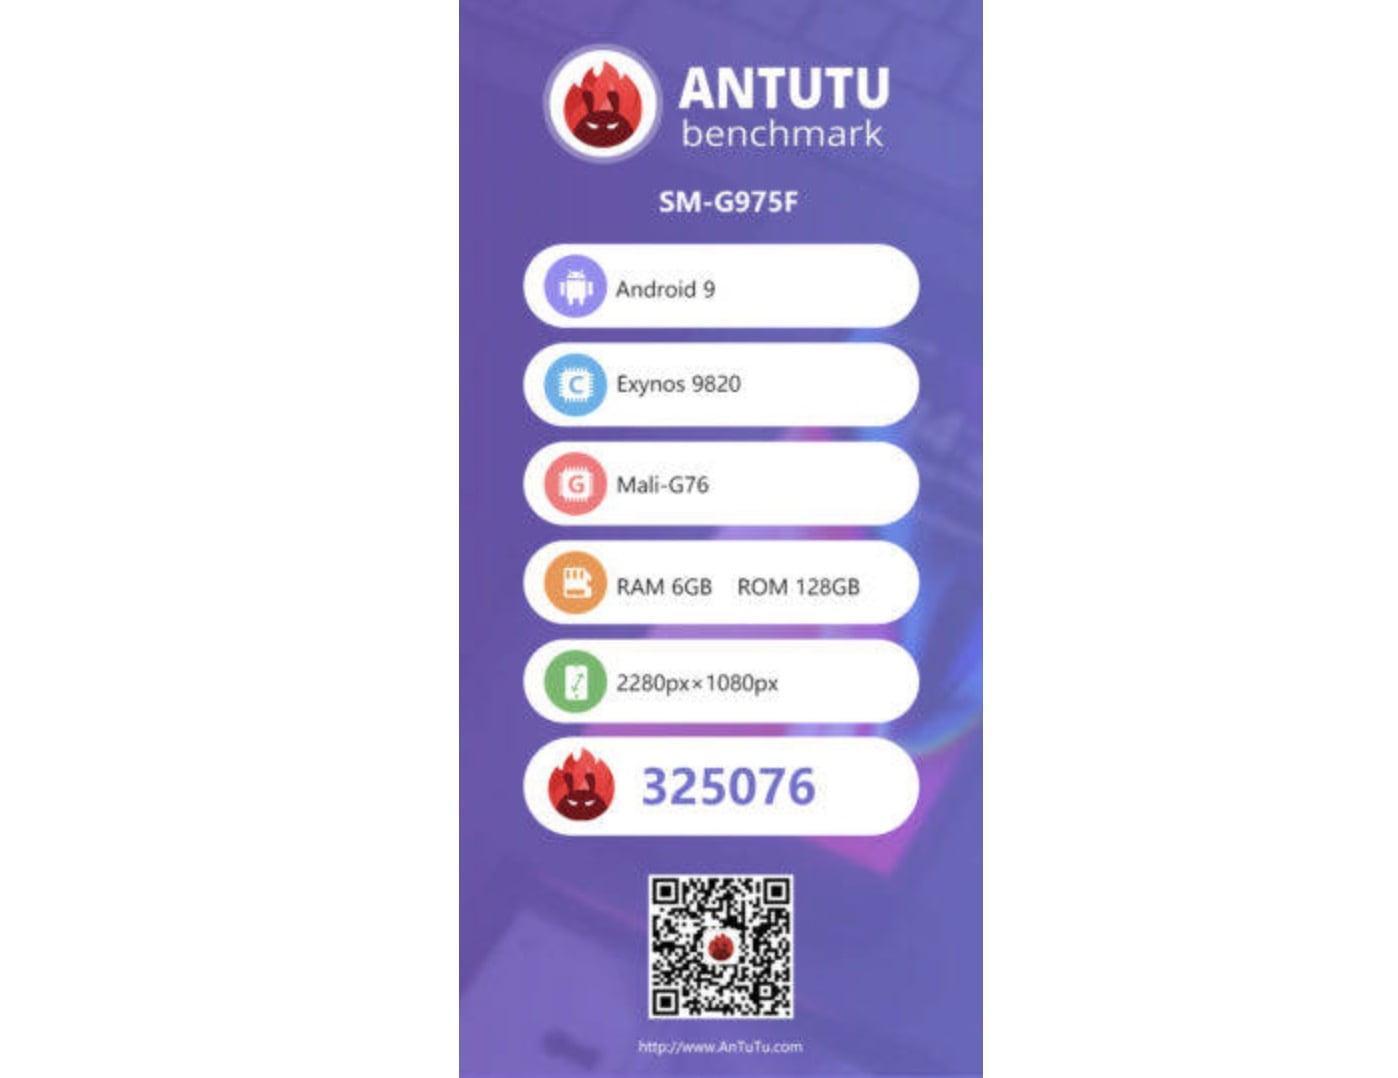 Samsung S10 Exynos 9820 su AnTuTu punteggio